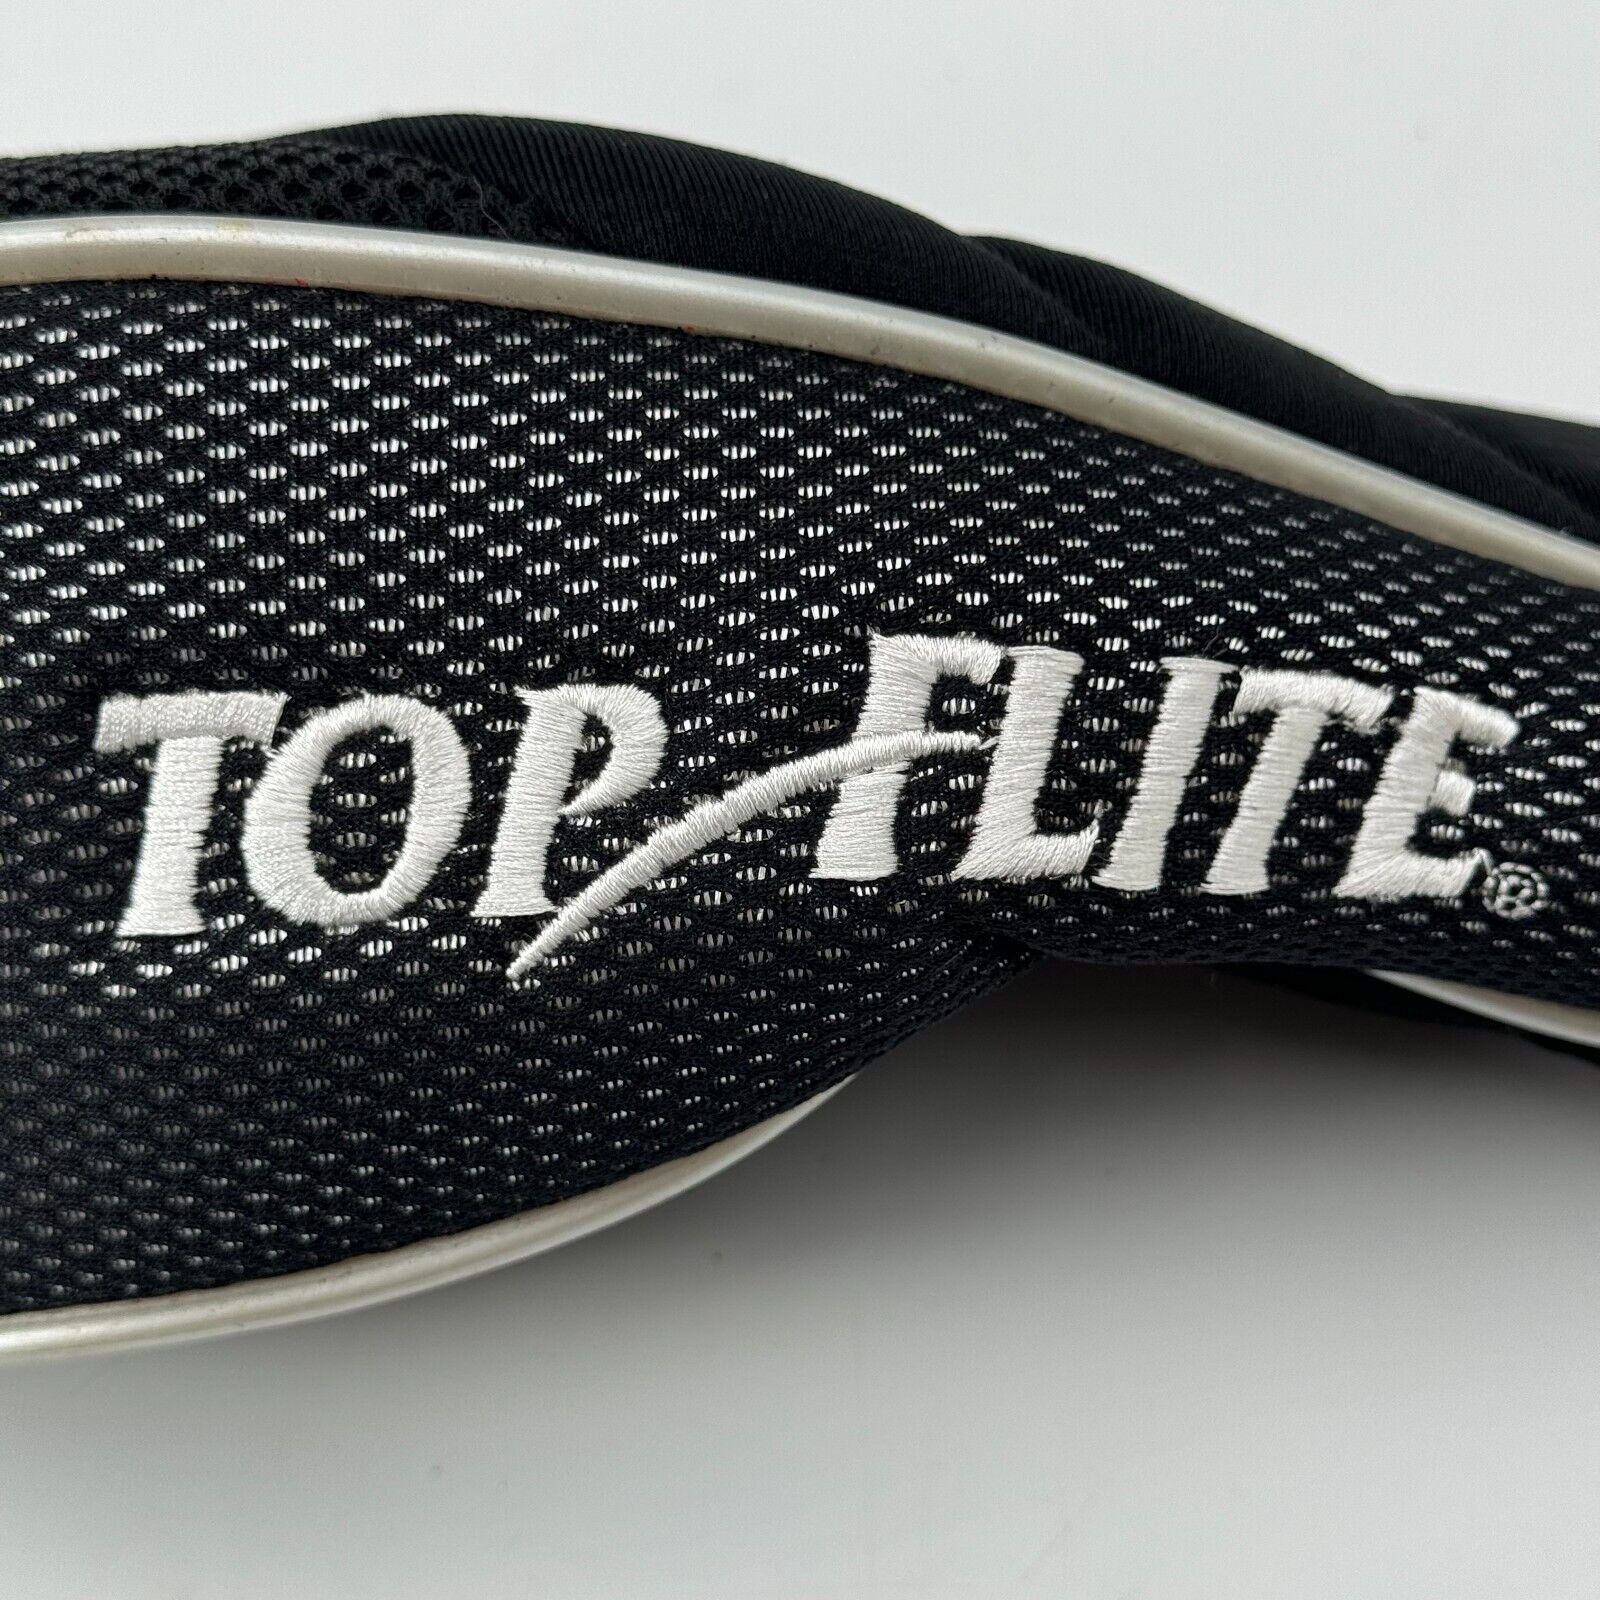 Top Flite 3 Wood Golf Club Driver Head Cover Black White Embroidered Logo Zipper